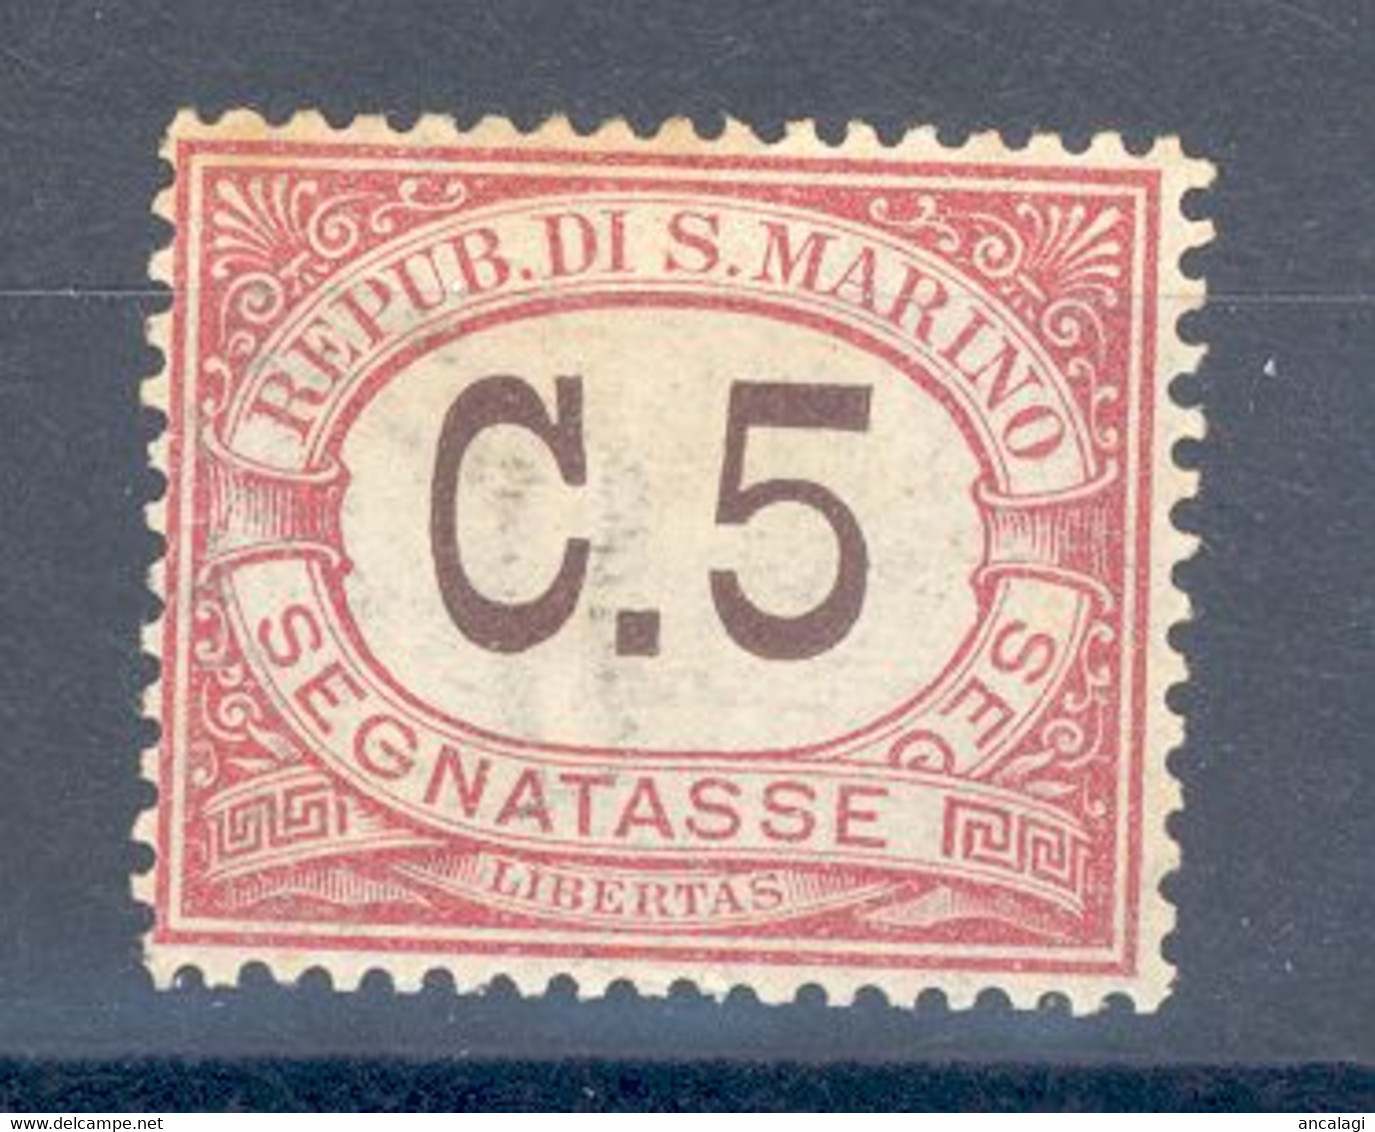 RSM F.lli Nuovi Segnatasse 006 - San Marino 1924 - 1v. C.5 - Timbres-taxe